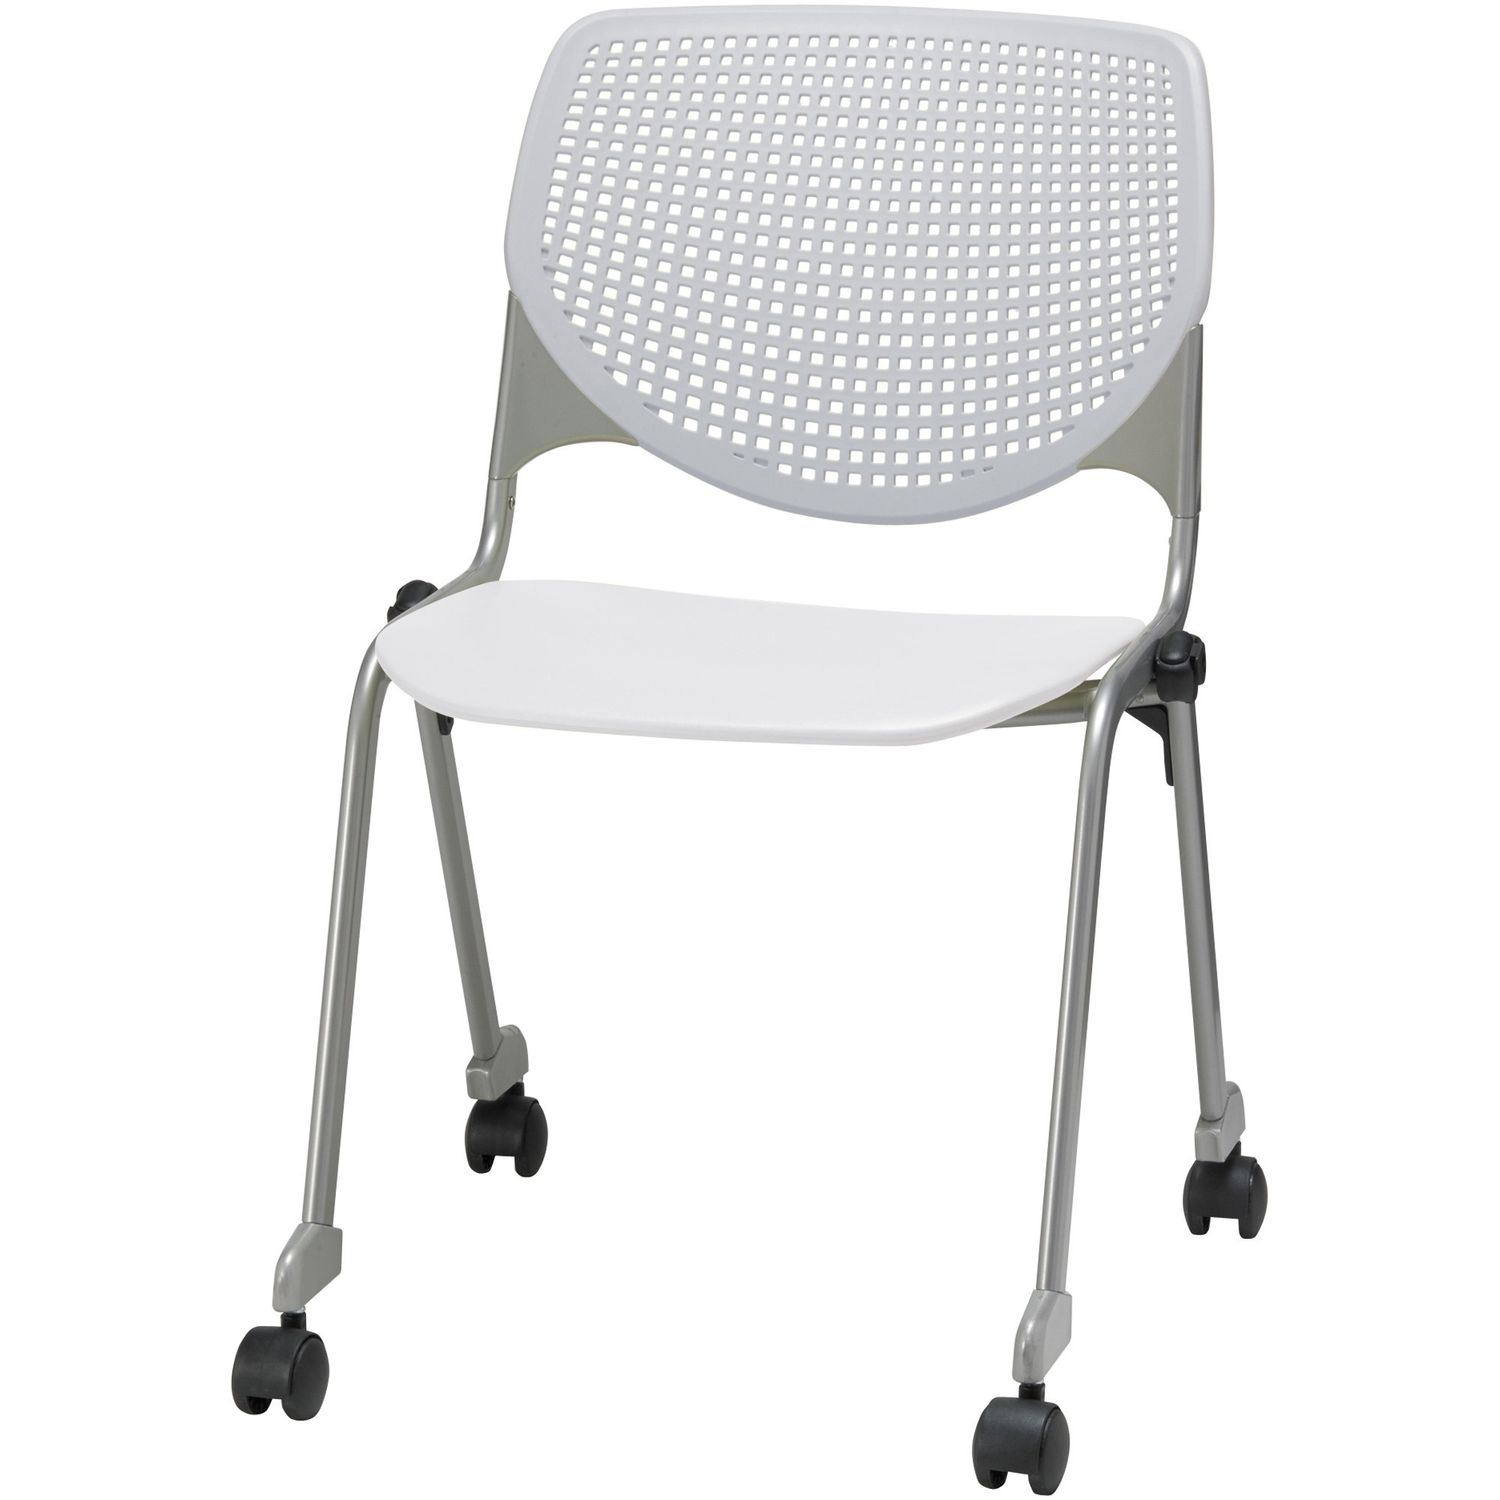 Kool Caster Chair-Perforated Back White Polypropylene Seat, Light Gray Polypropylene, Aluminum Alloy Back, Powder Coated Silver Tubular Steel Frame, 1 Each